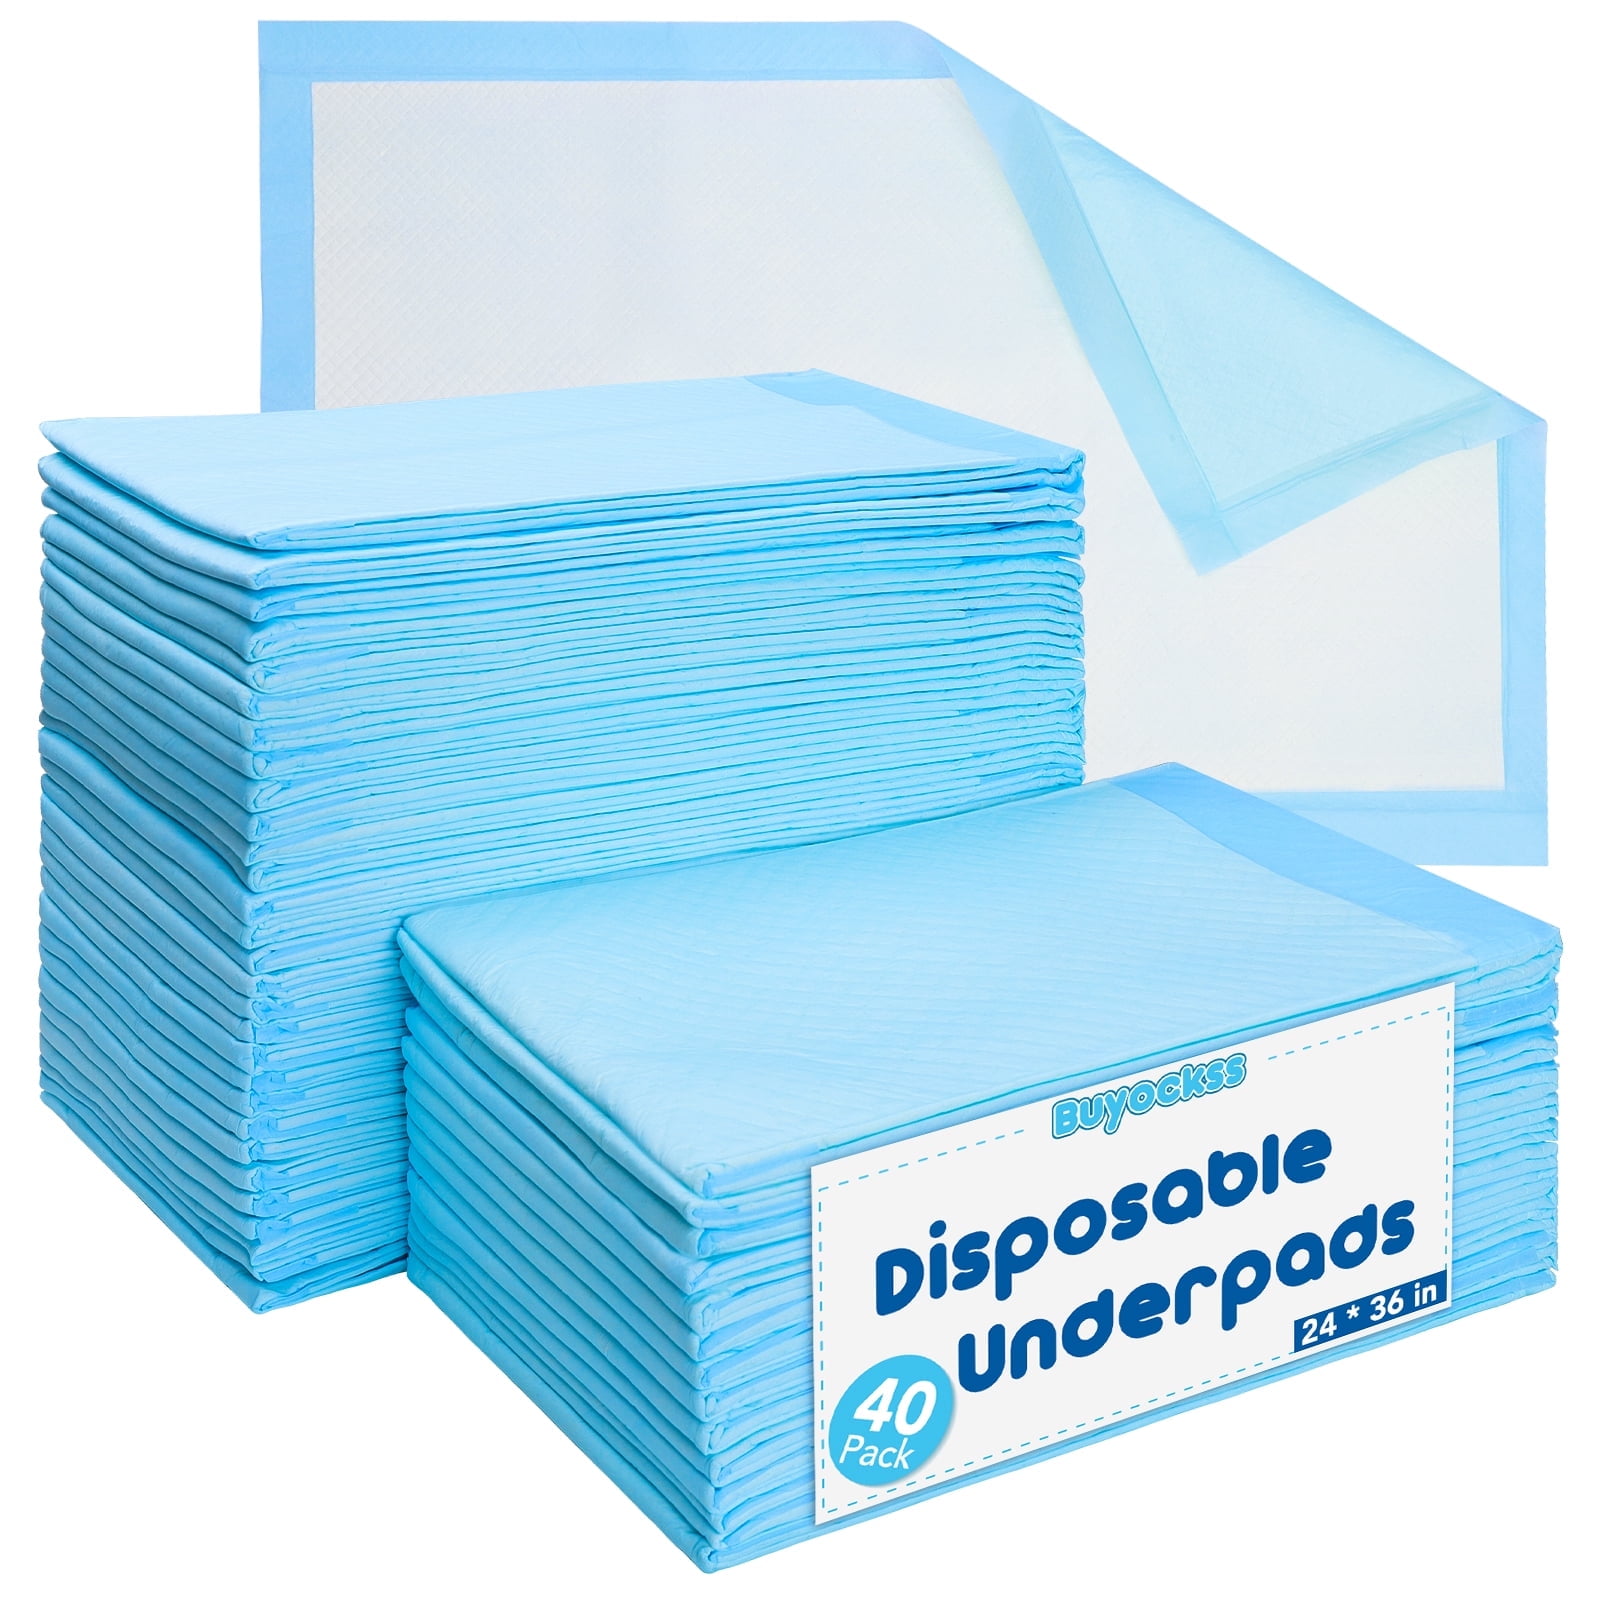 Buy Covidien Durasorb Plus Disposable Underpads